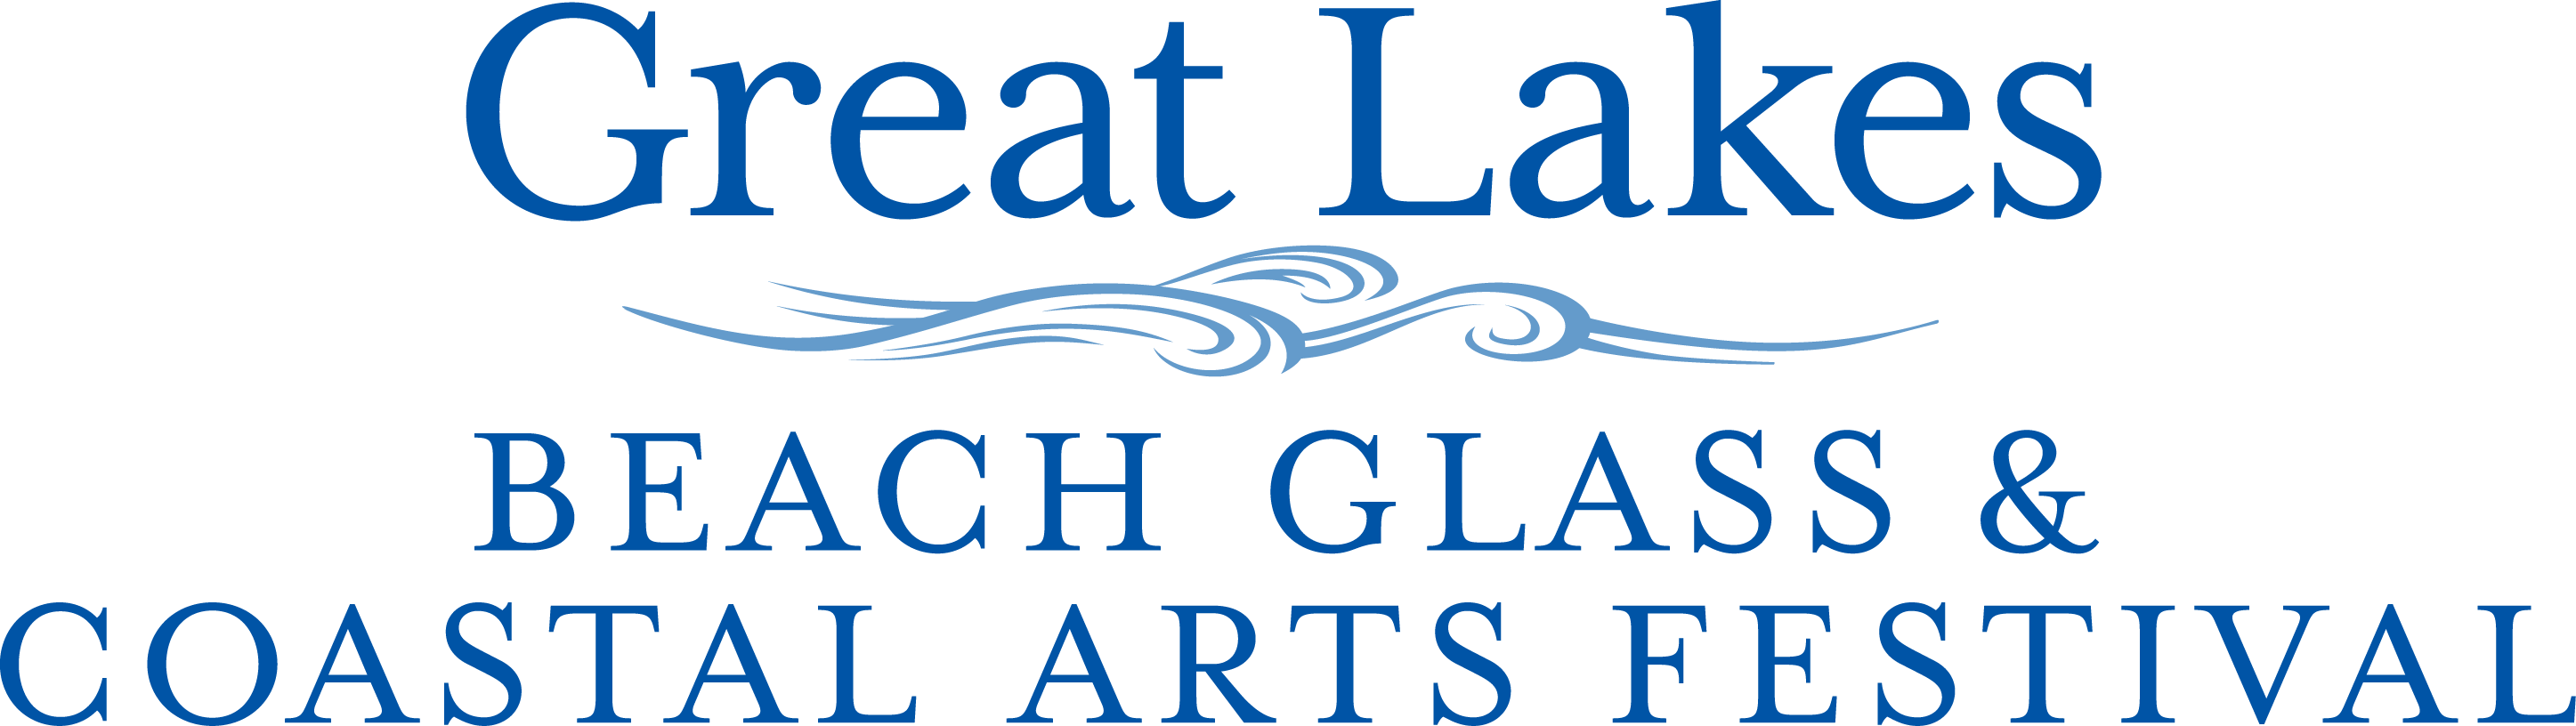 Great Lake Beach Glass Festival